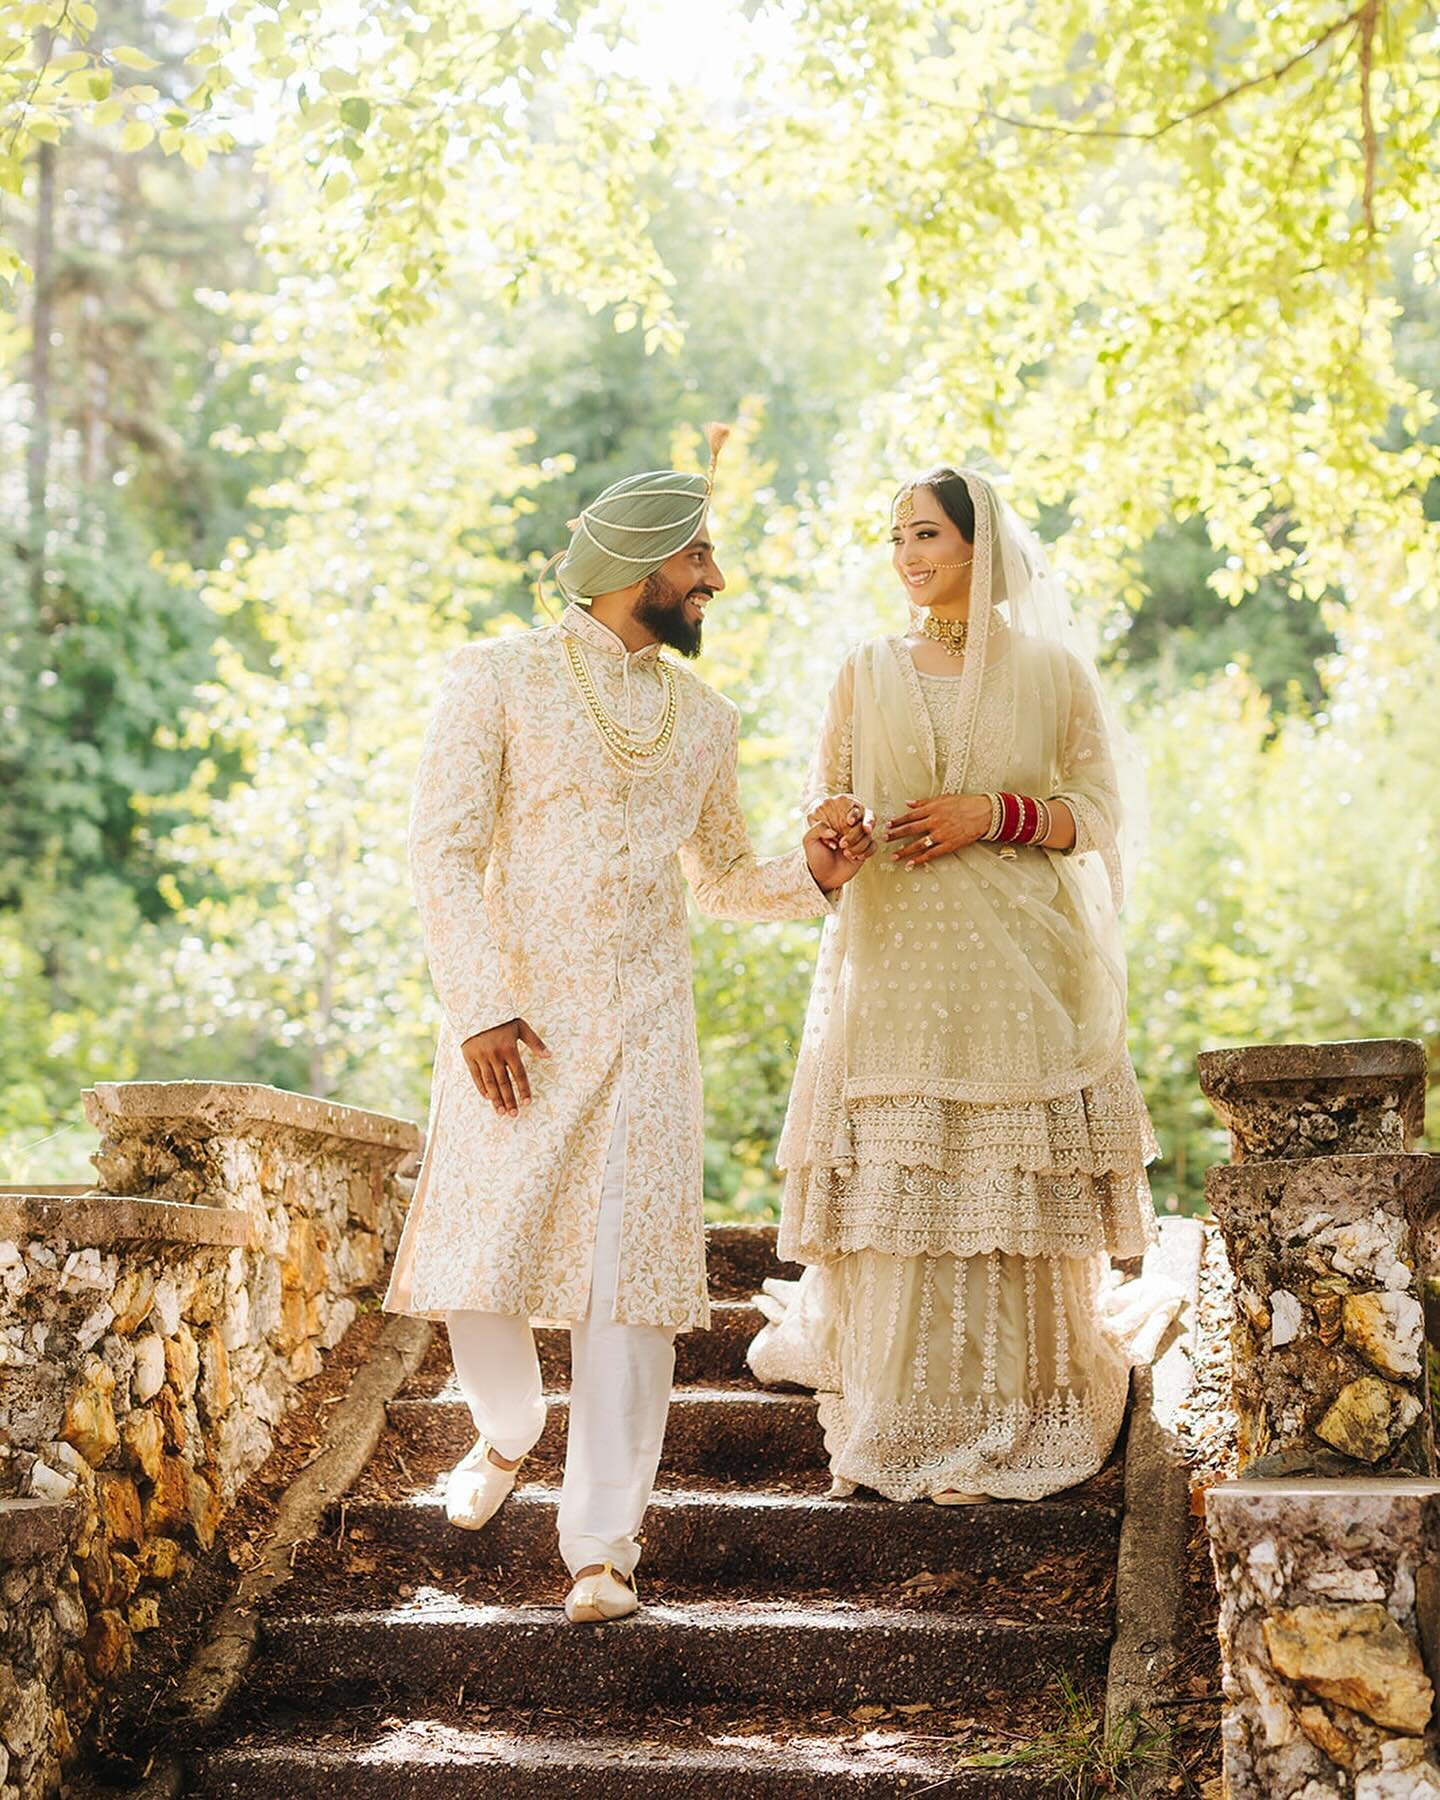 Soft dreamy moments from an incredible week in Prince George celebrating the wedding week with Preet and Raghev!⁣
⁣
⁣
⁣
⁣
#vancouverweddings #vancouverwedding #wedmegood #indianbride #surrey #weddingdress #bridalmakeup #bridaltrousseau #indianwedding